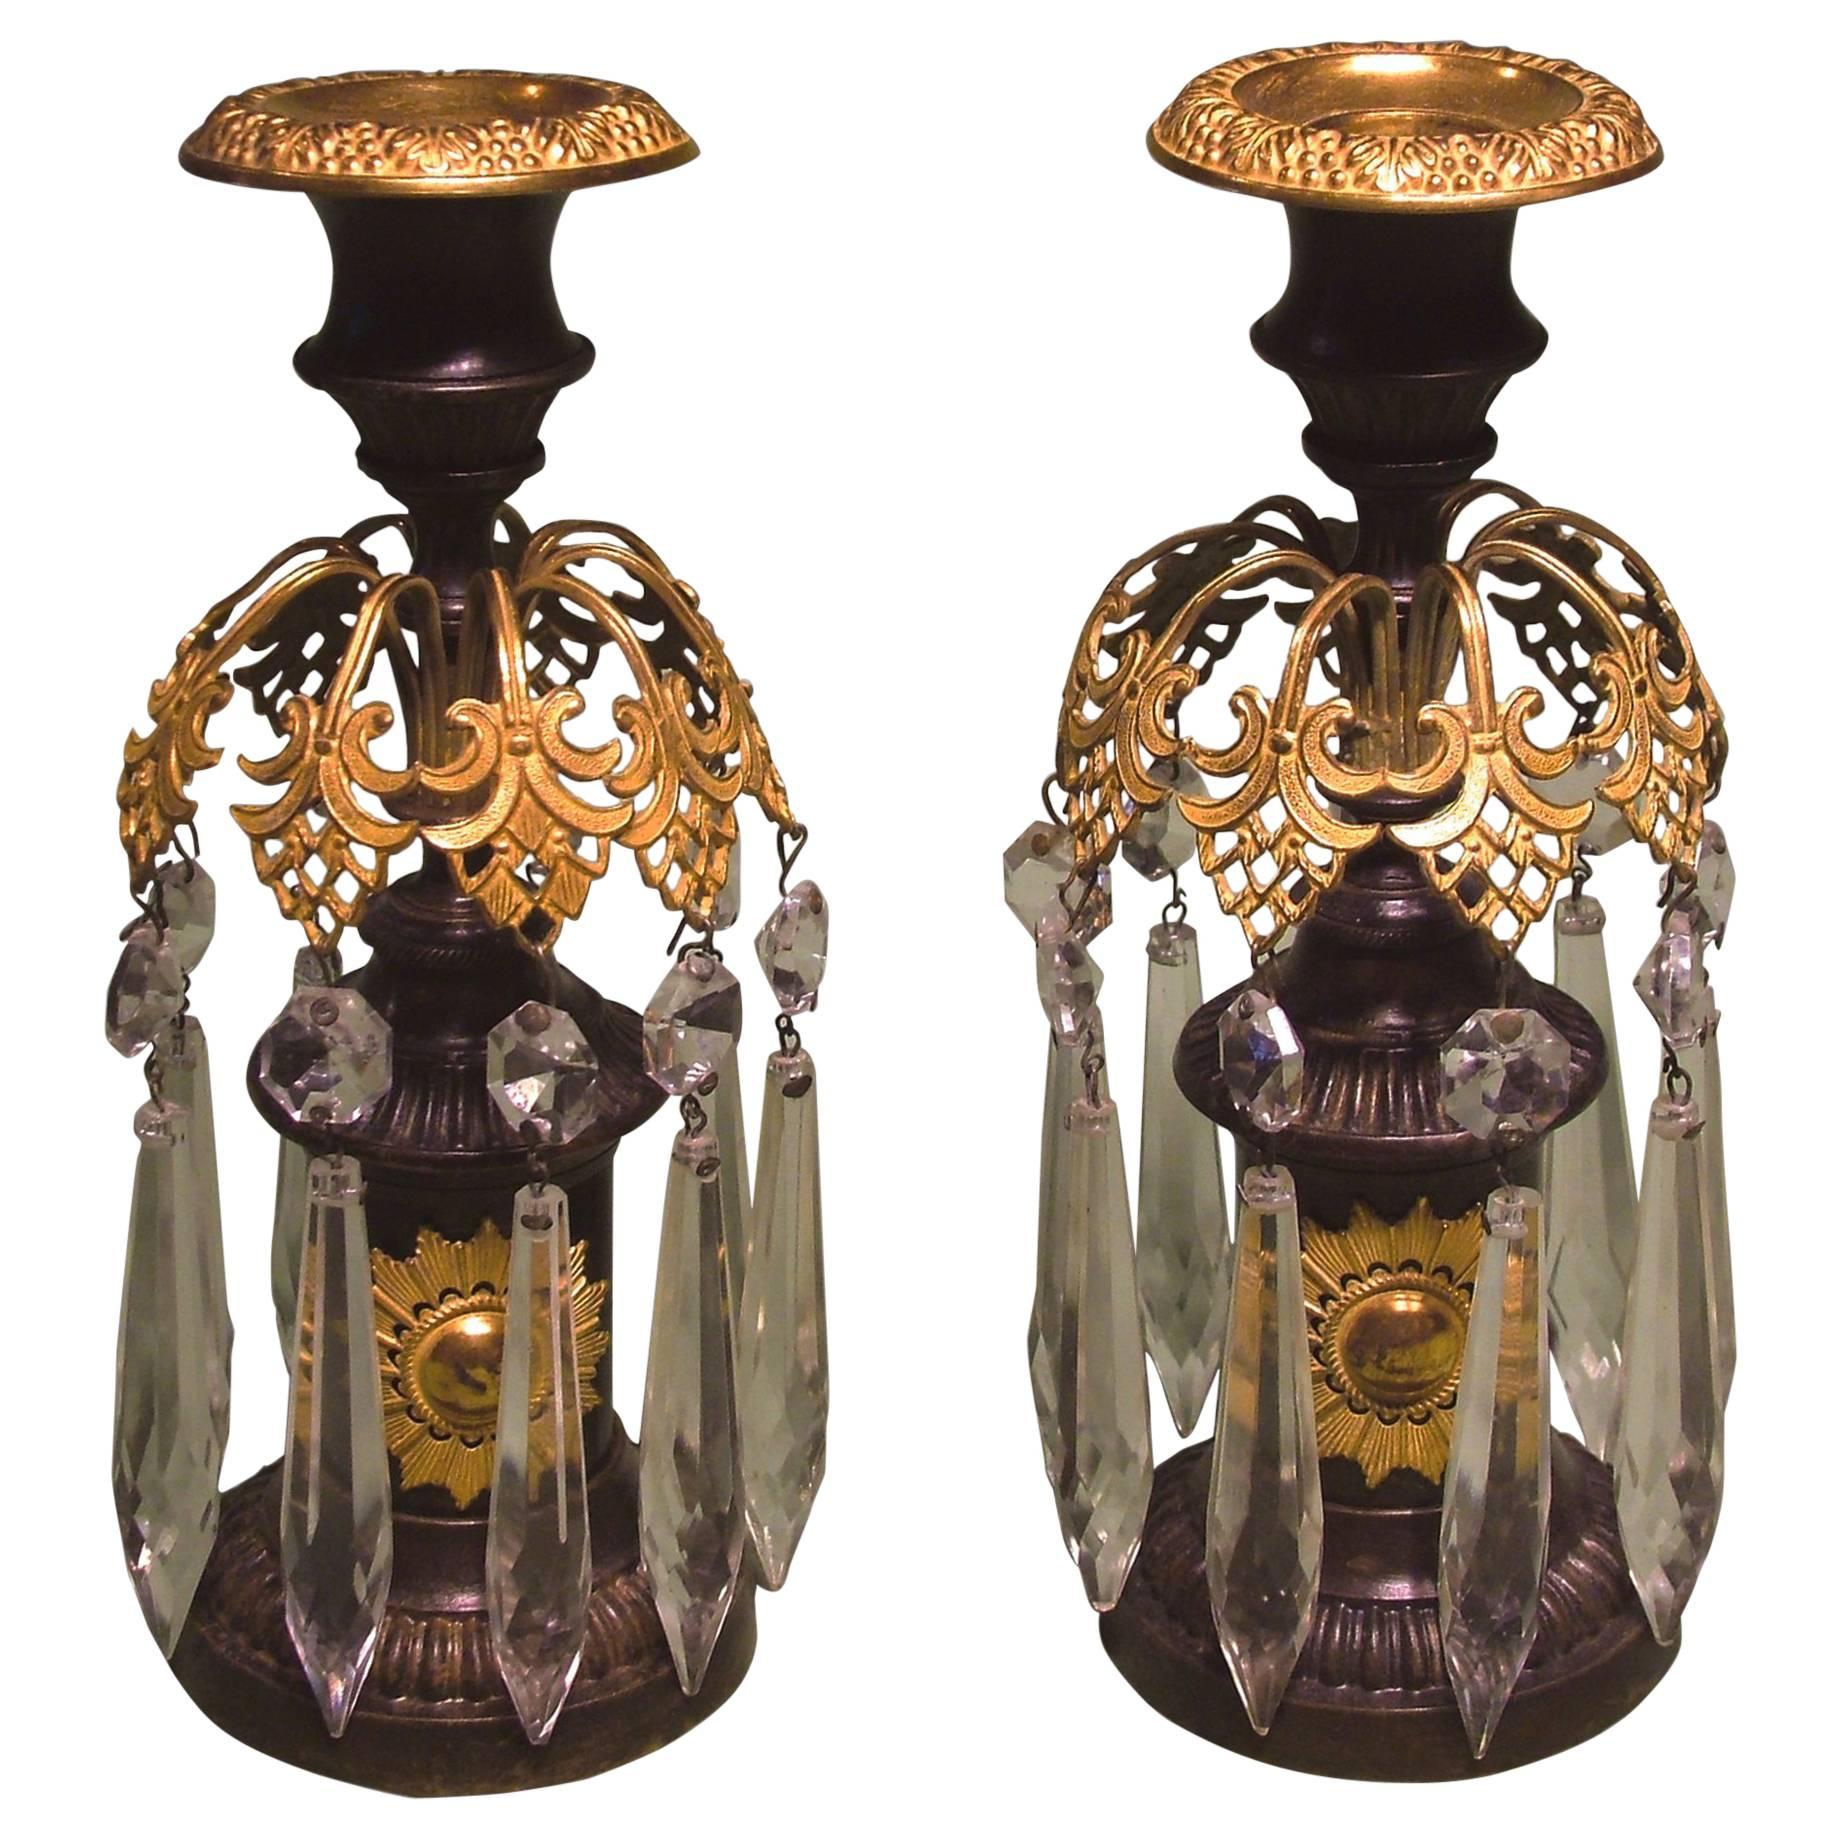 Pair of Regency Period Bronze and Ormolu Lustre Candlesticks